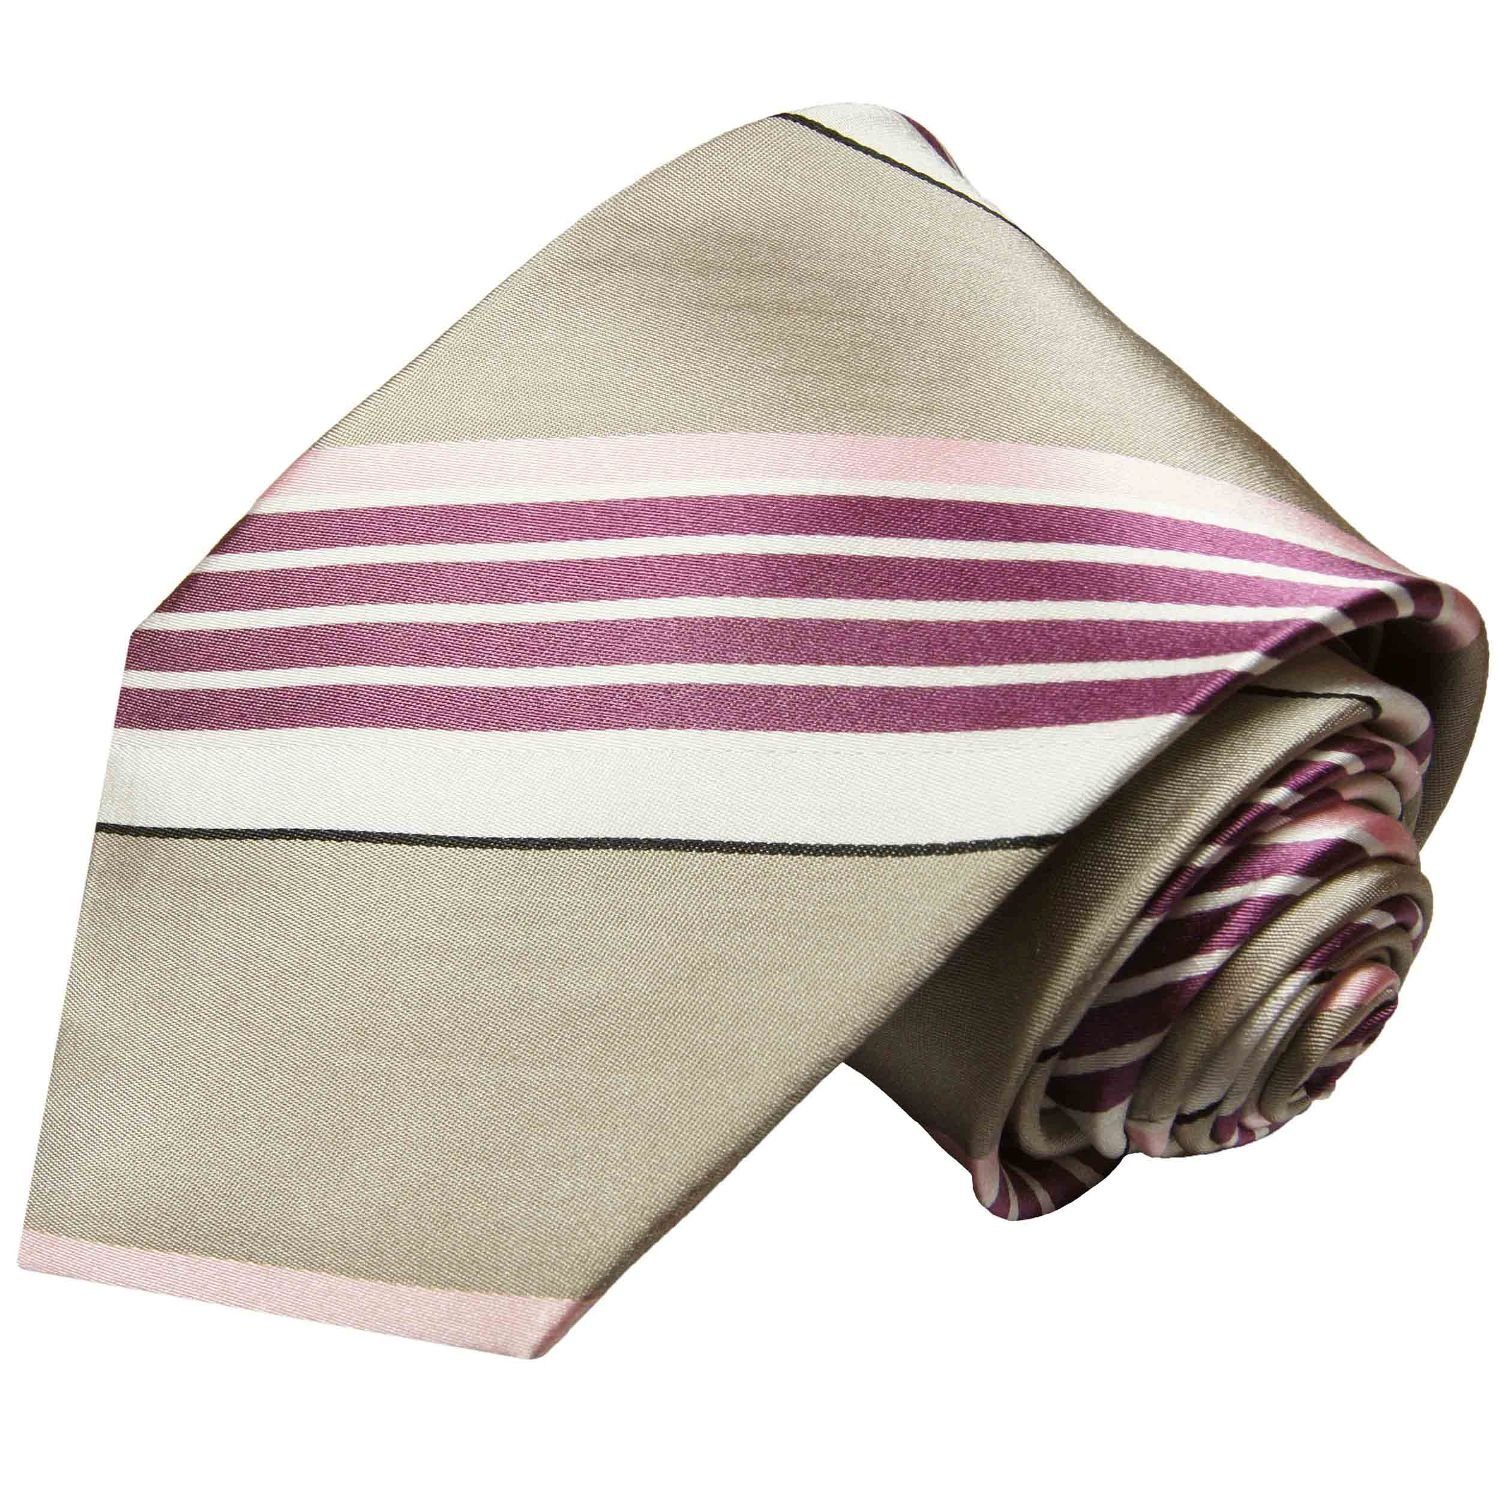 Paul Malone Krawatte Designer Seidenkrawatte Herren Schlips modern gestreift 100% Seide Schmal (6cm), grau pink 713